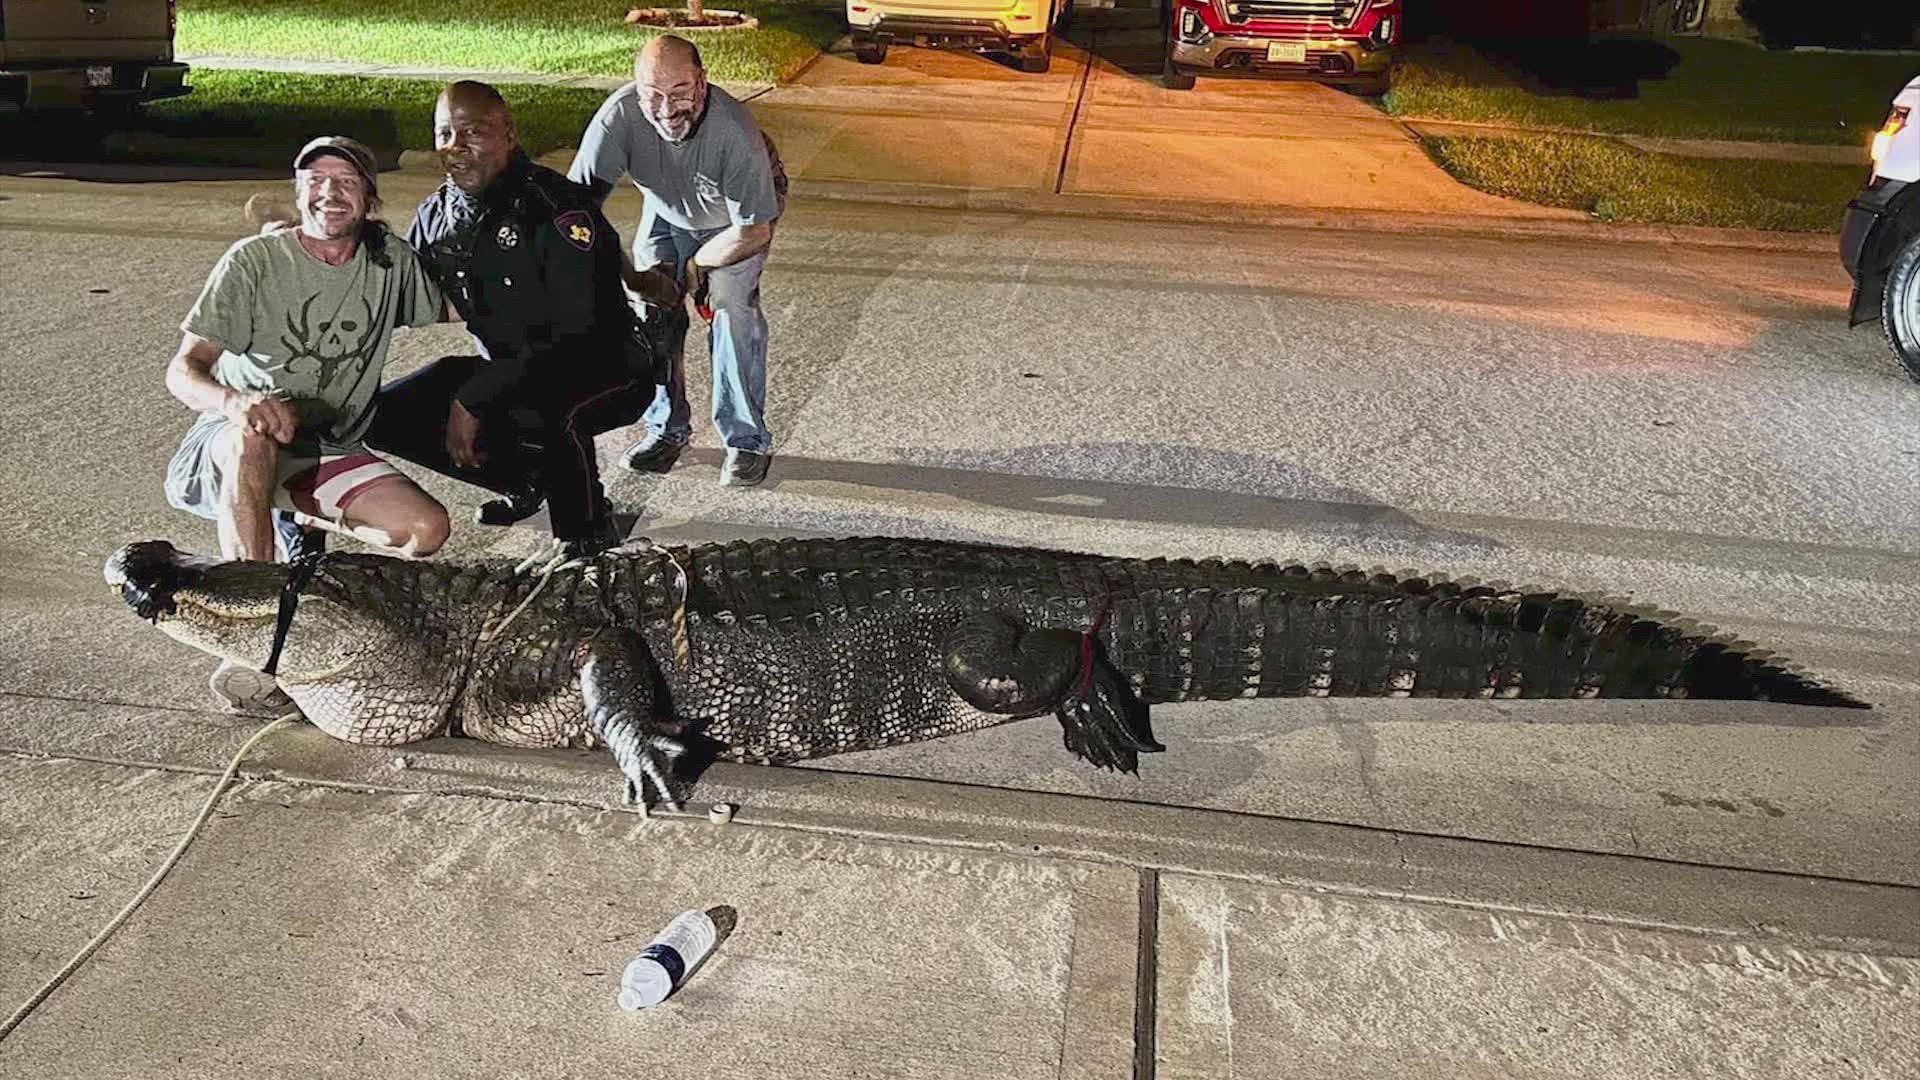 An alligator was captured strolling through a neighborhood on North Lake Branch Lane near Lake Houston in Atascocita.